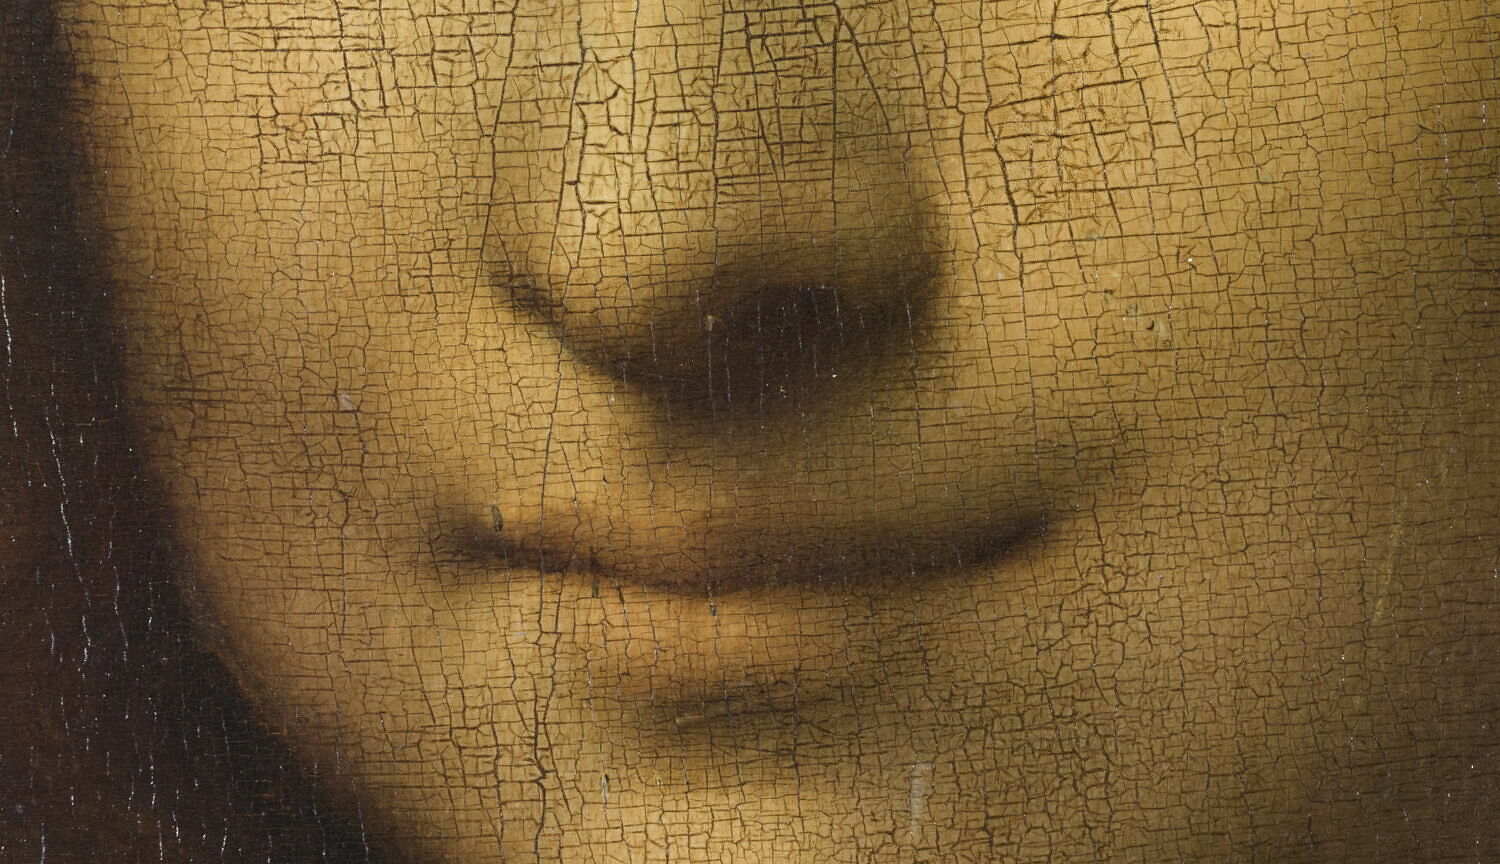 Portrait de Lisa Gherardini, dit La Joconde ou Monna Lisa